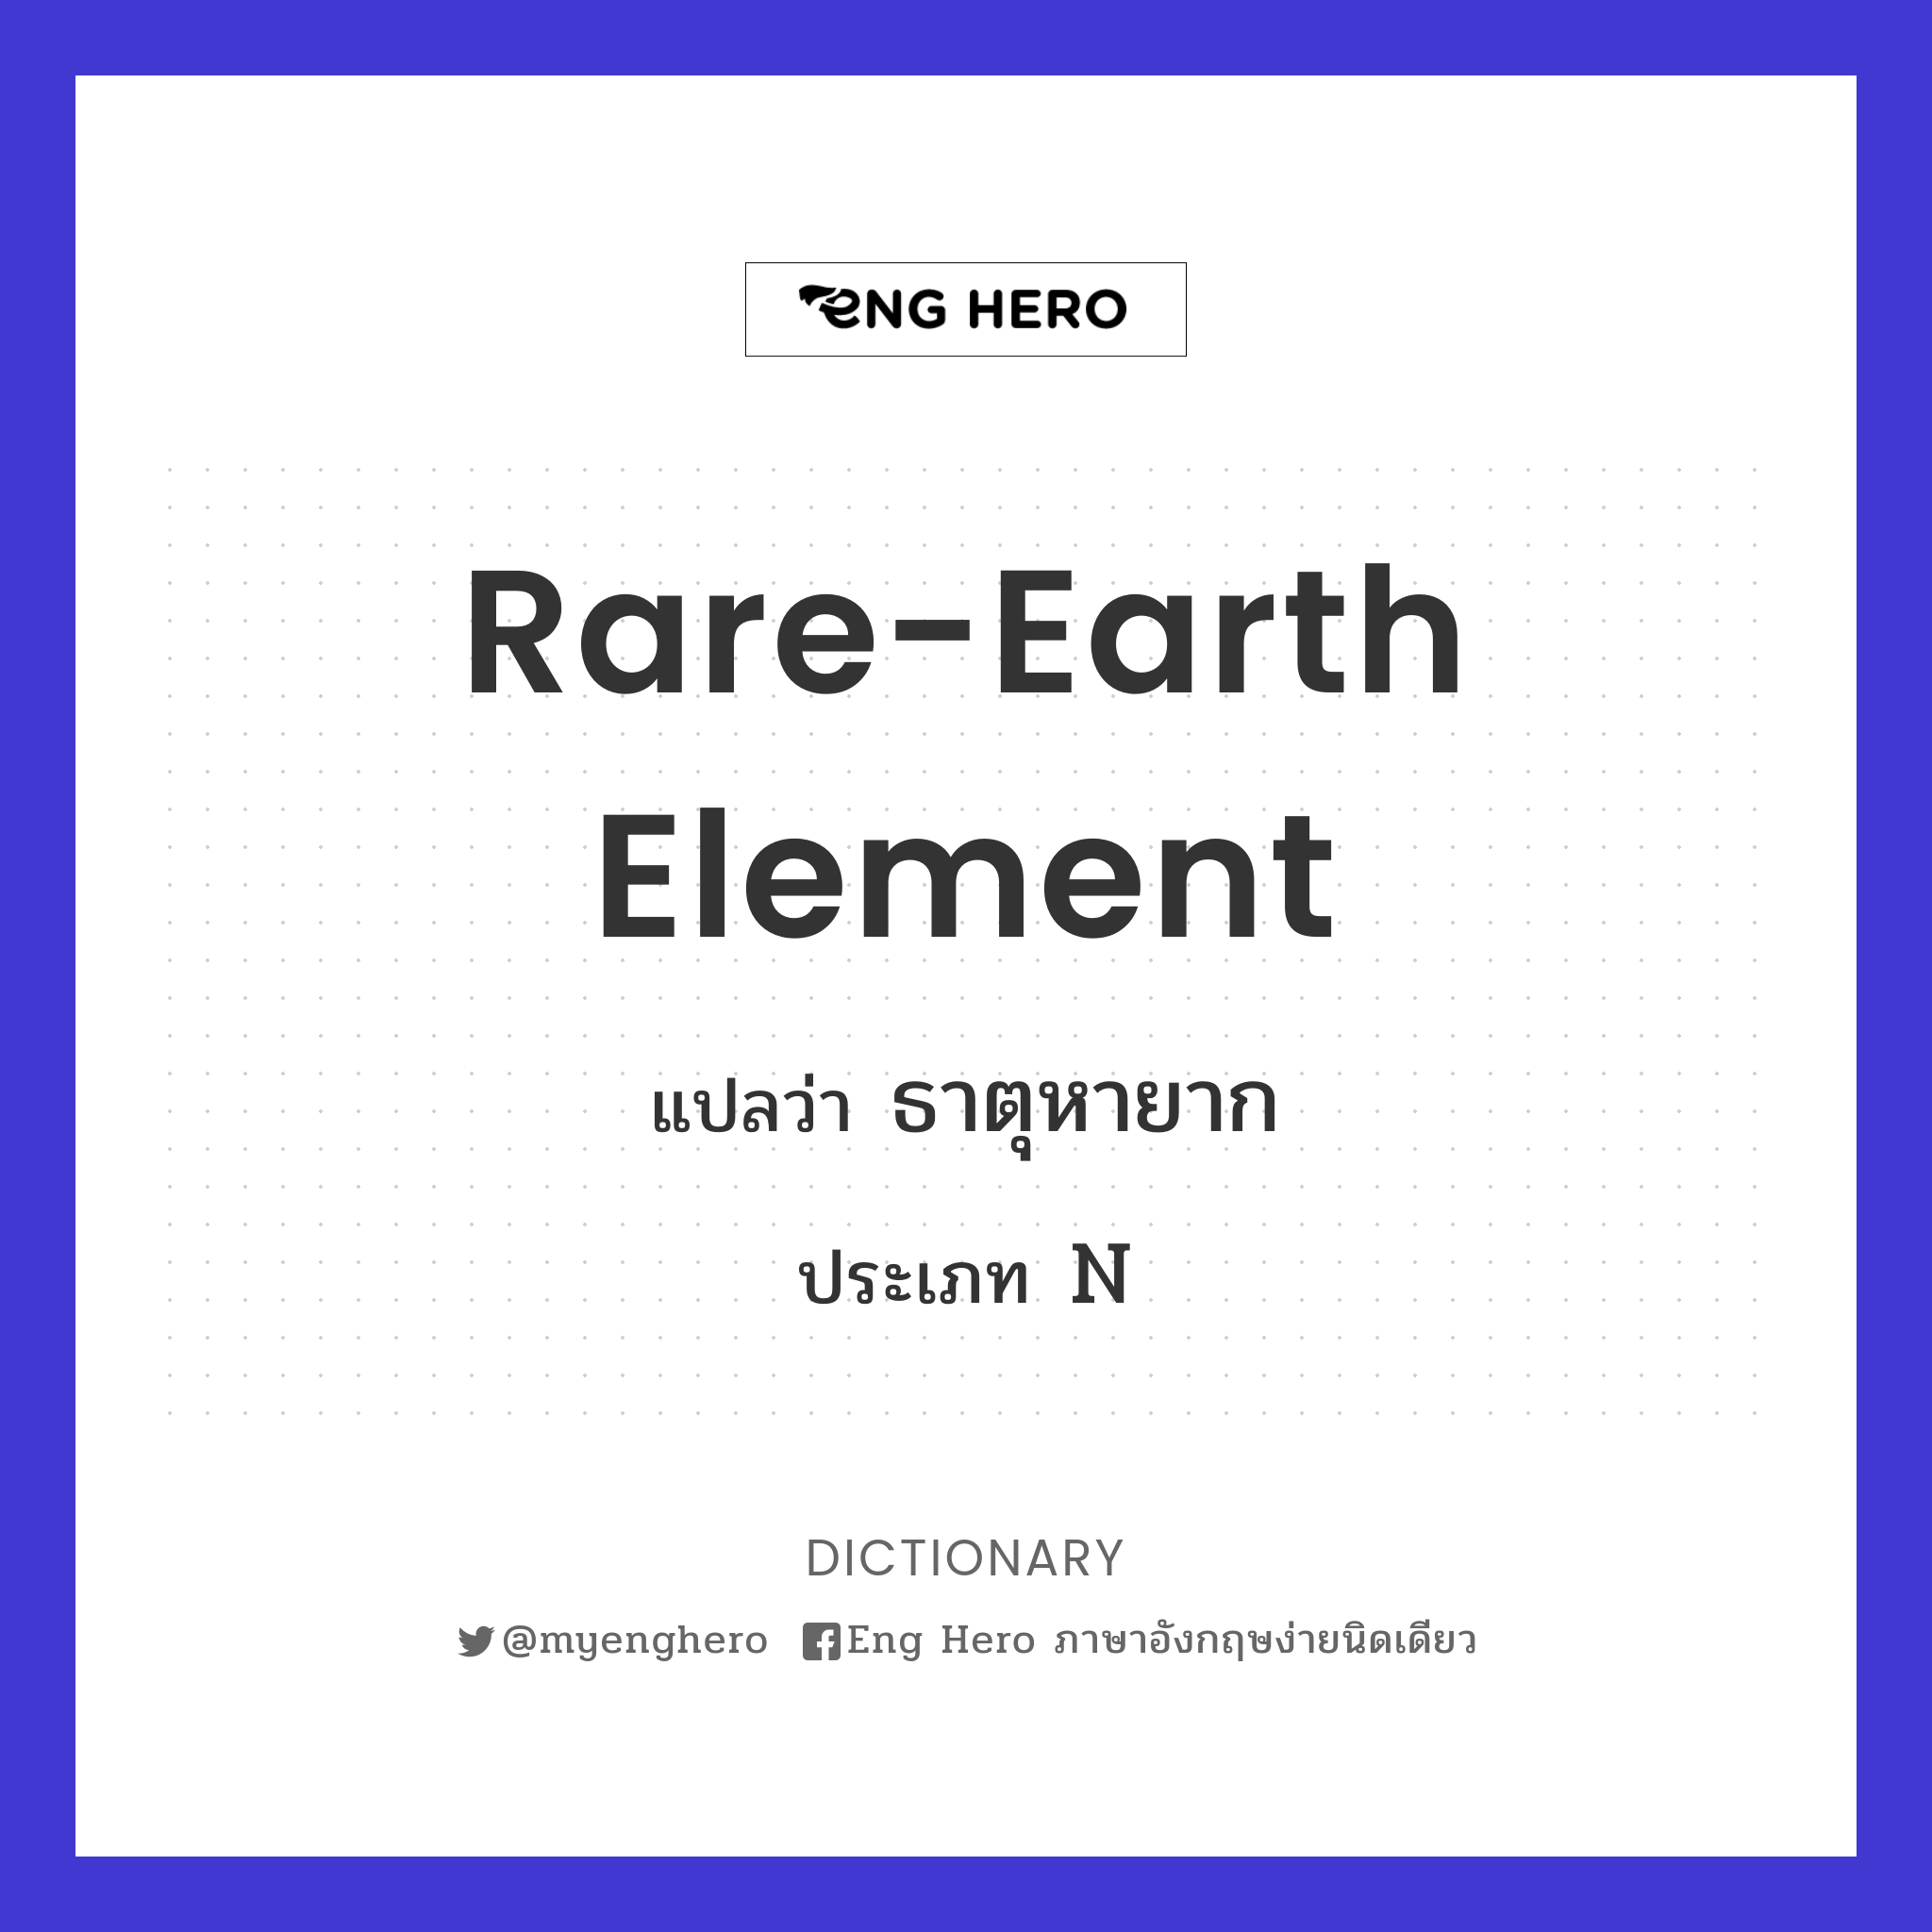 rare-earth element